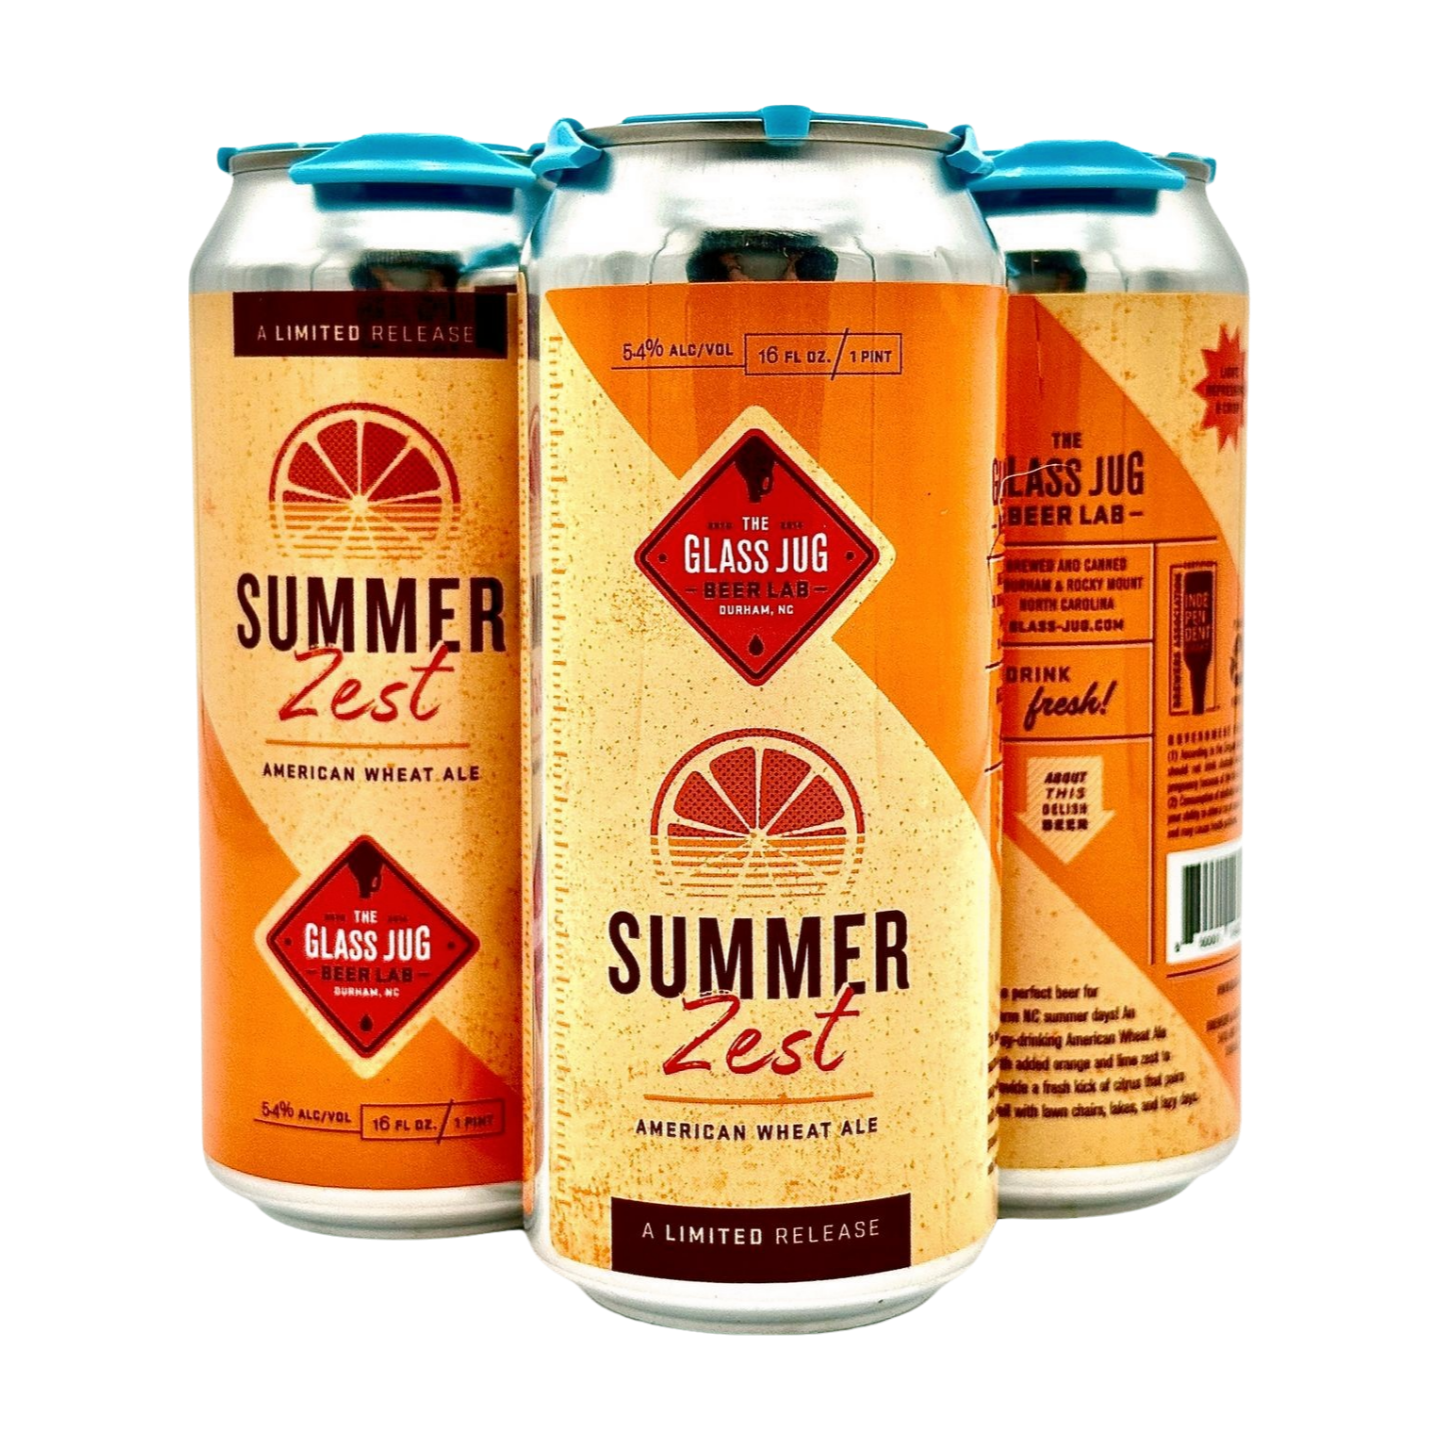 Summer Zest, 16 oz cans, 4 pack